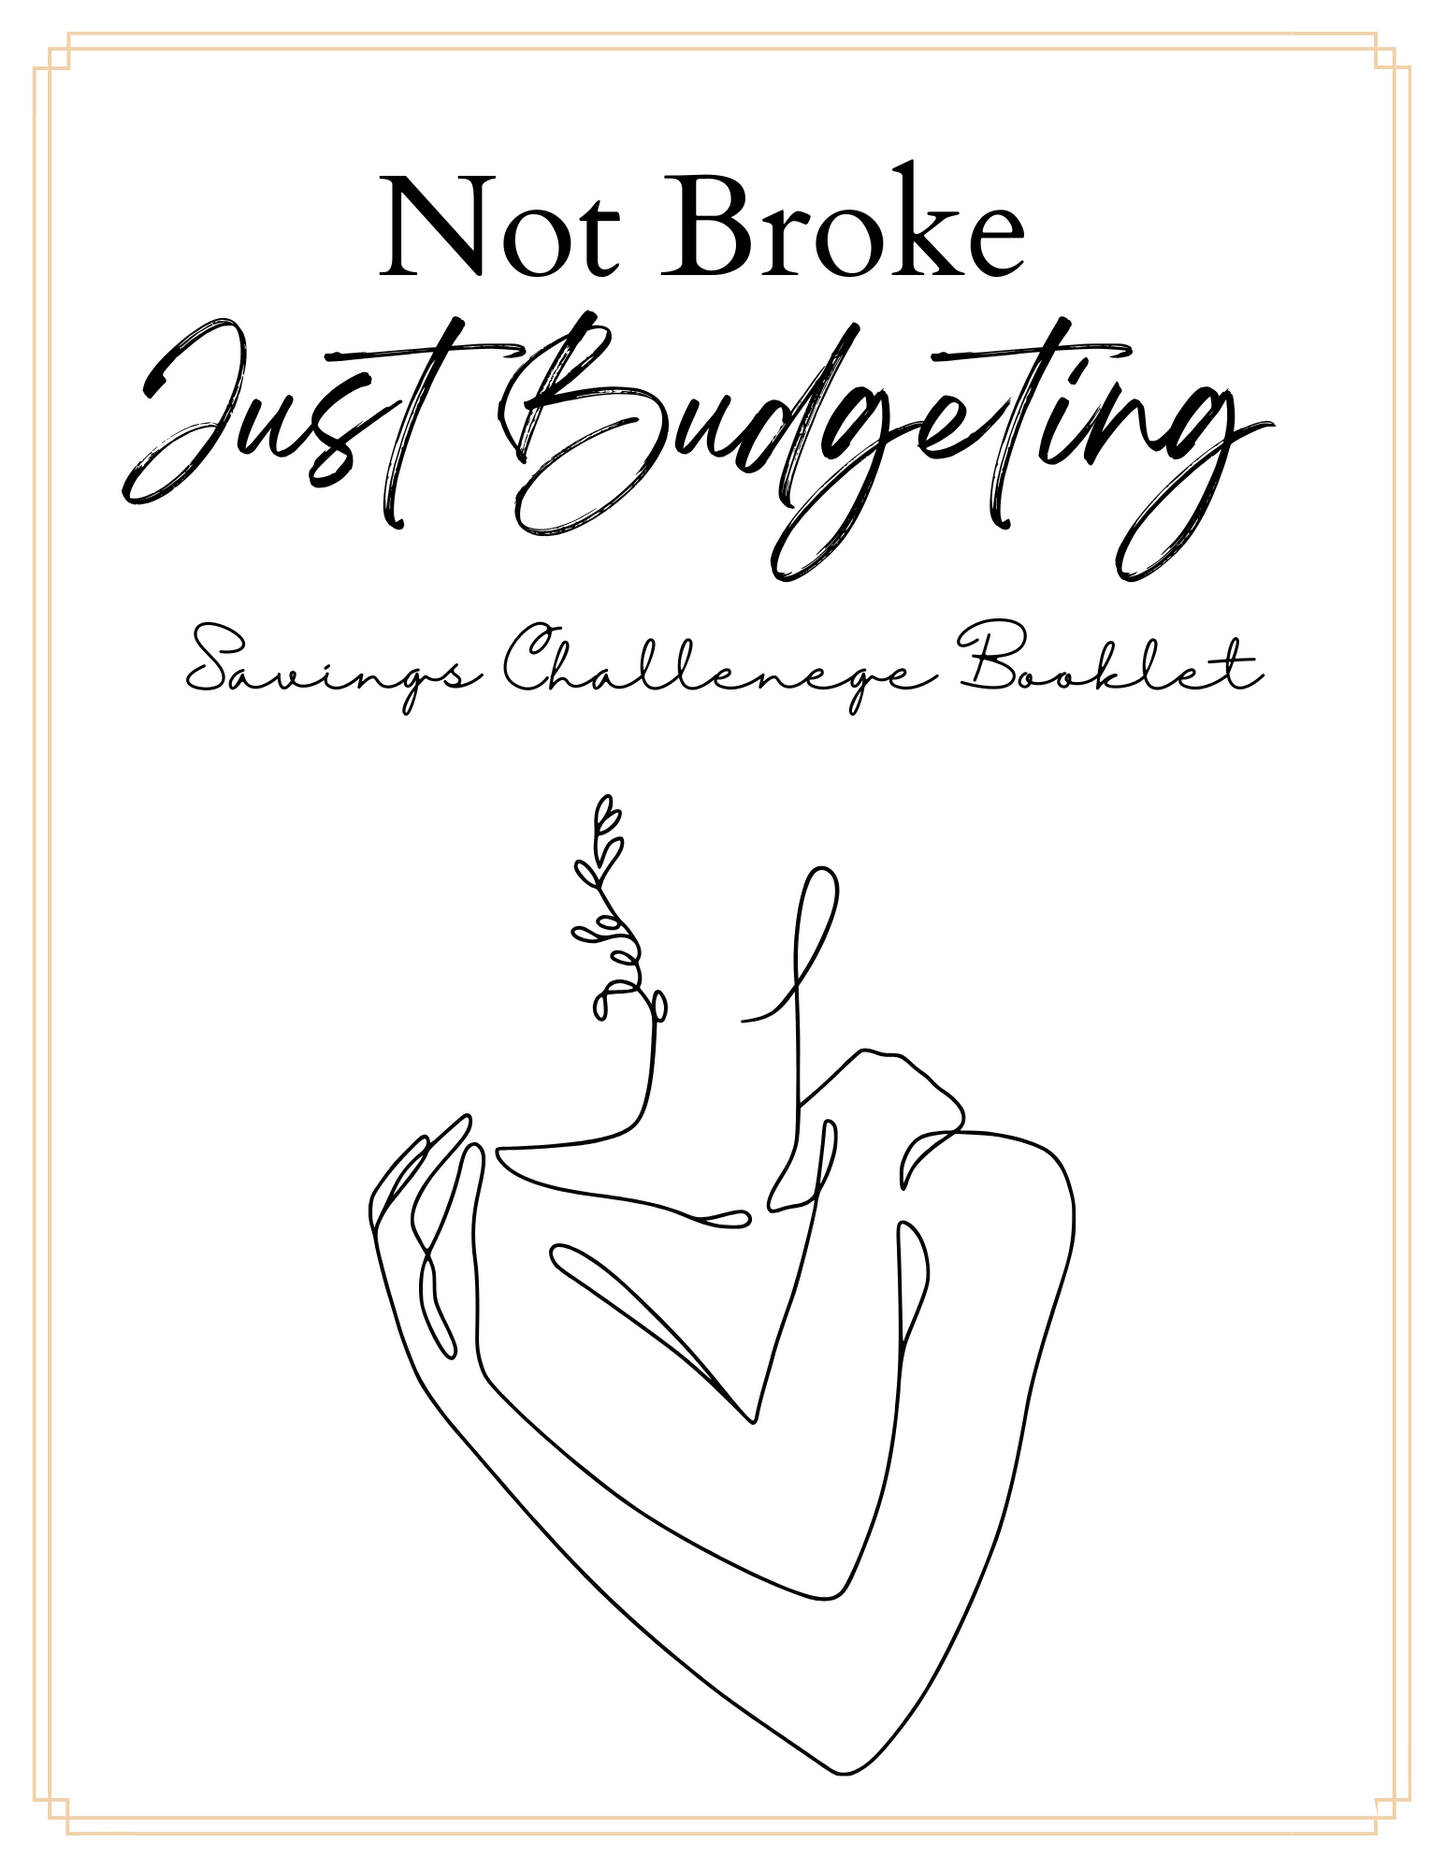 Not Broke Just Budgeting Savings Challenge Booklet (Digital Download)